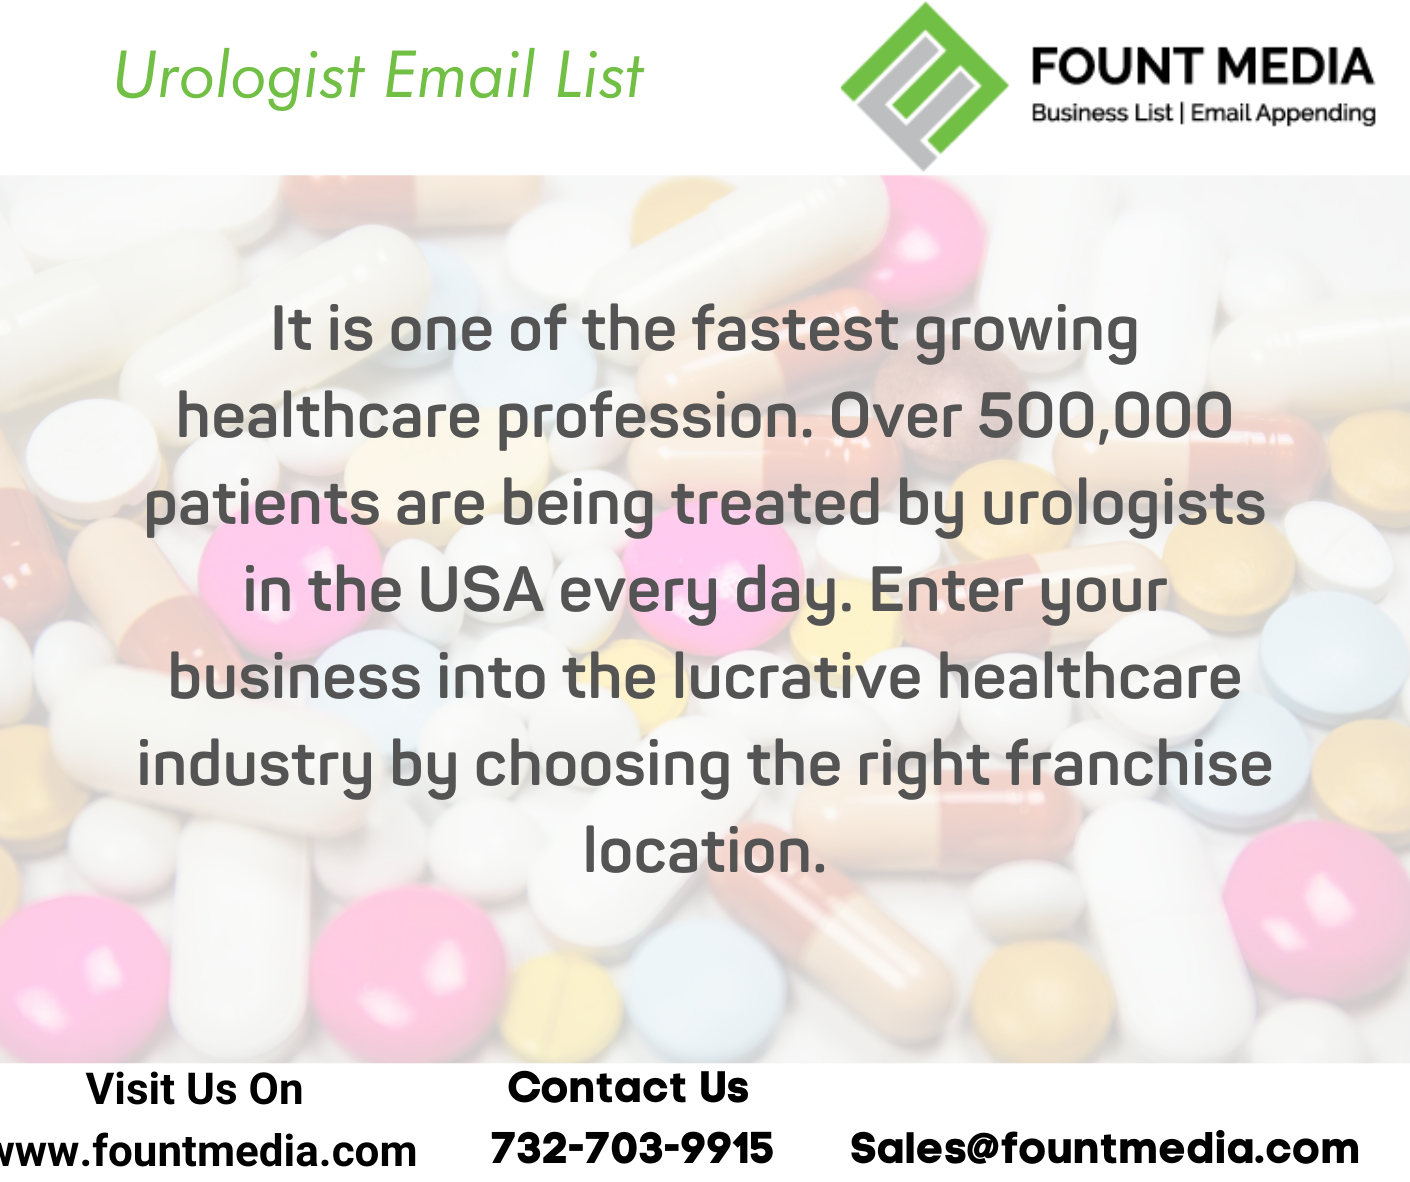 Urologist Email List | 100% Trusted Urology Mailing Addresses | US